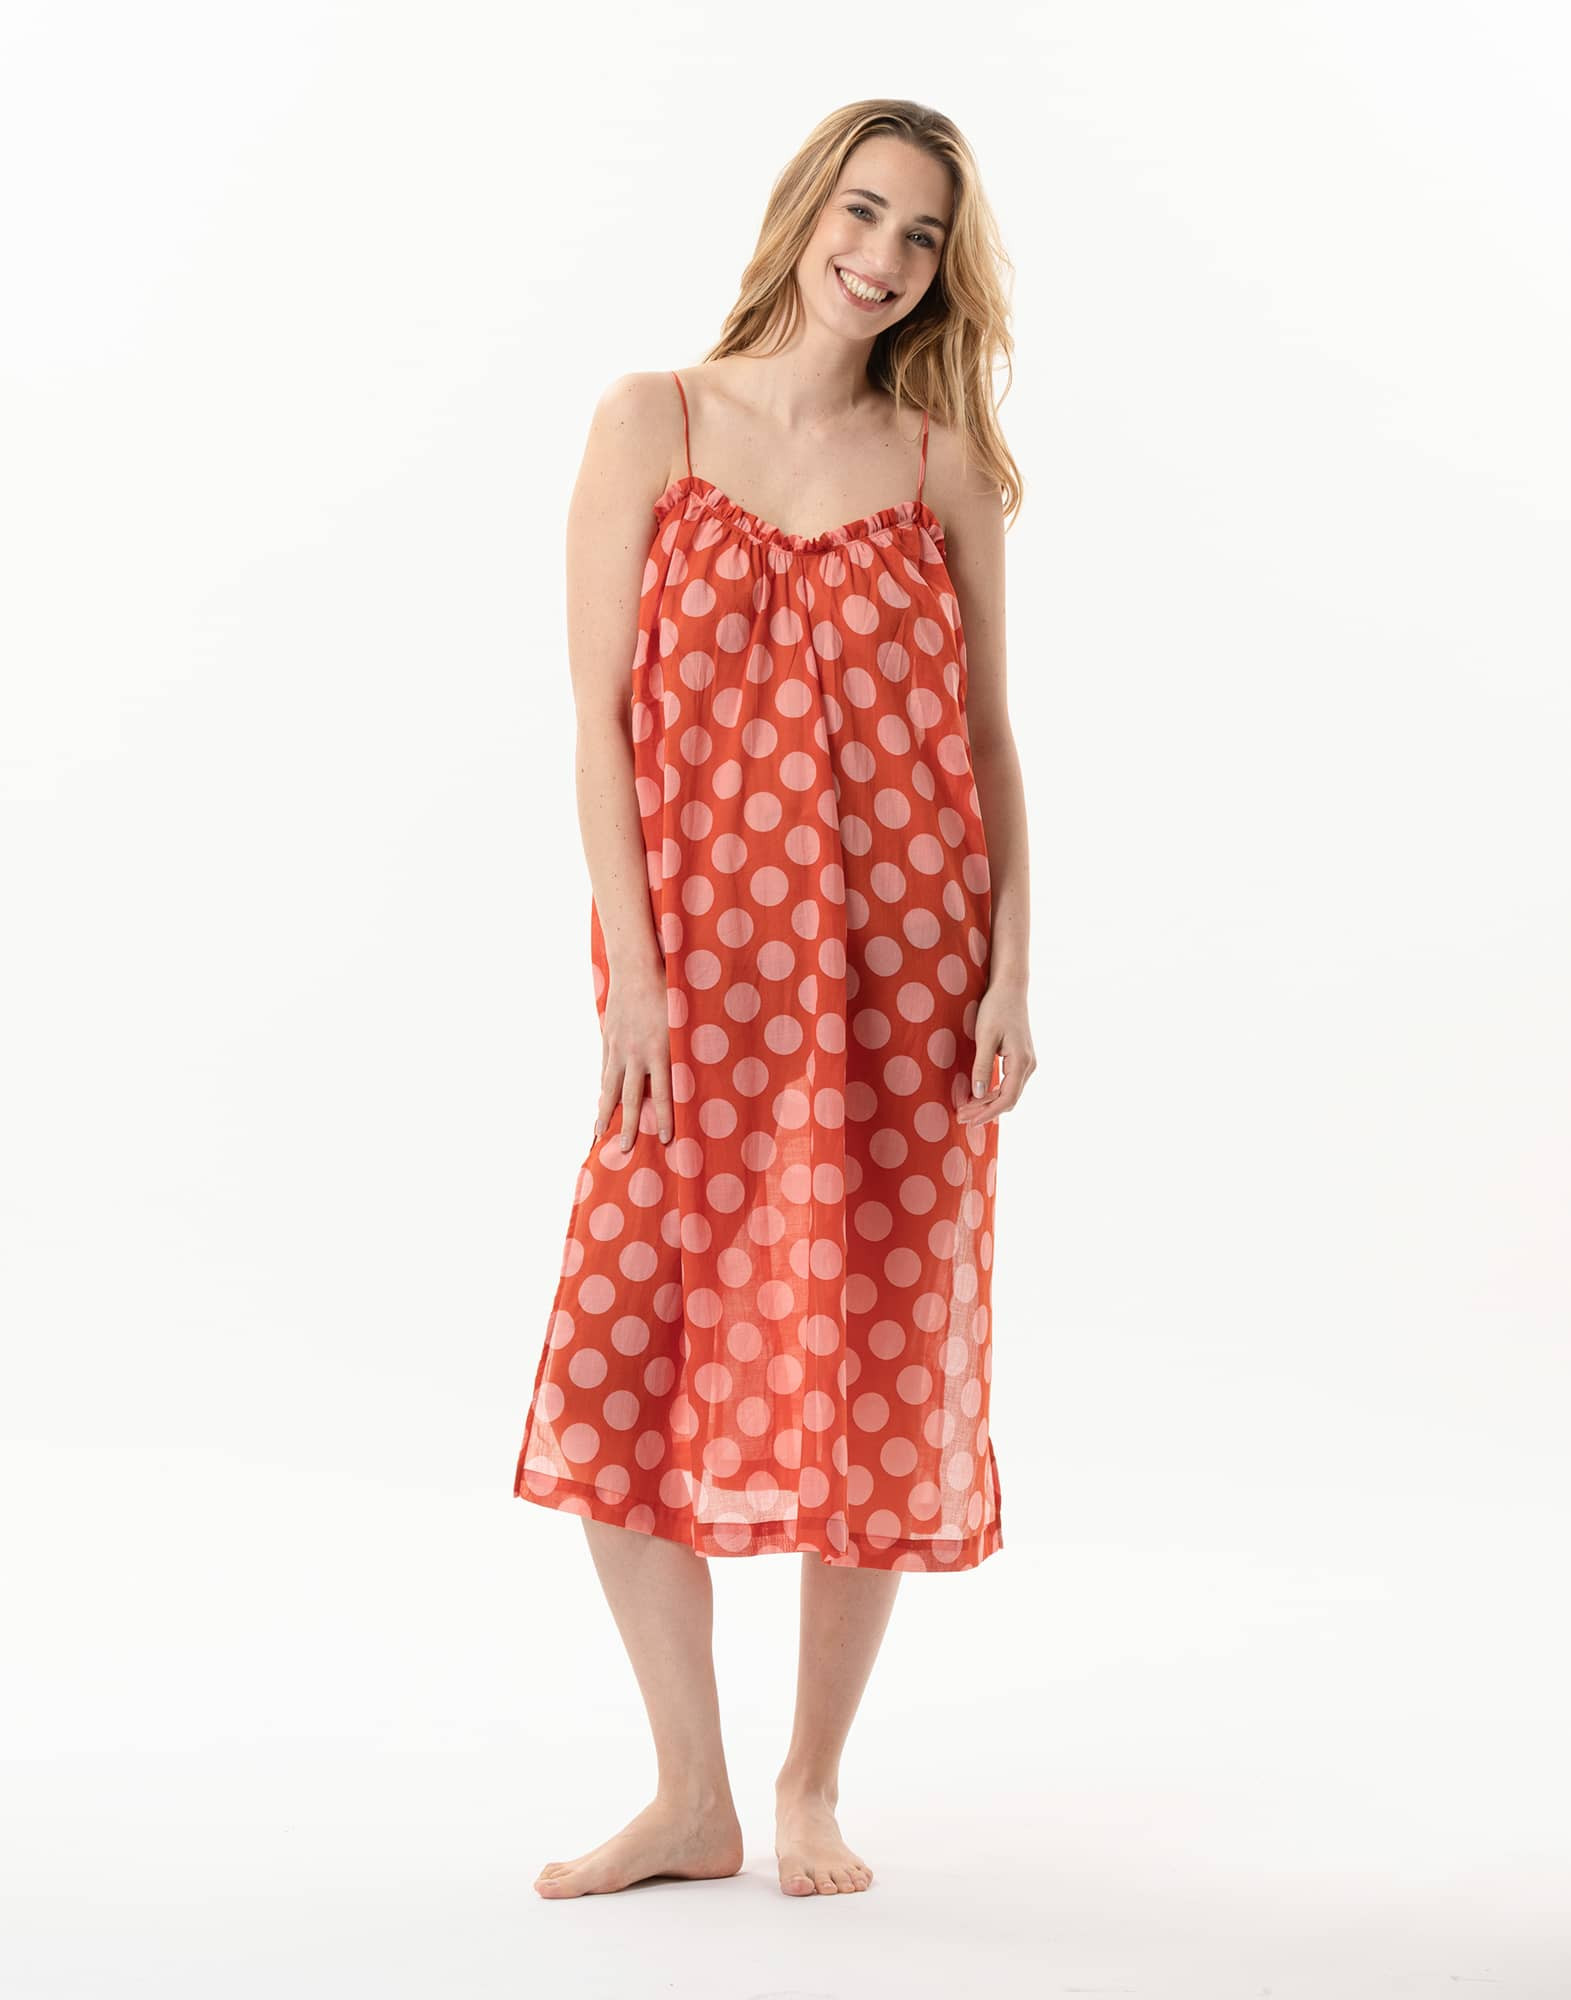 Polka dot printed dress in 100% cotton RIVA 740 pink